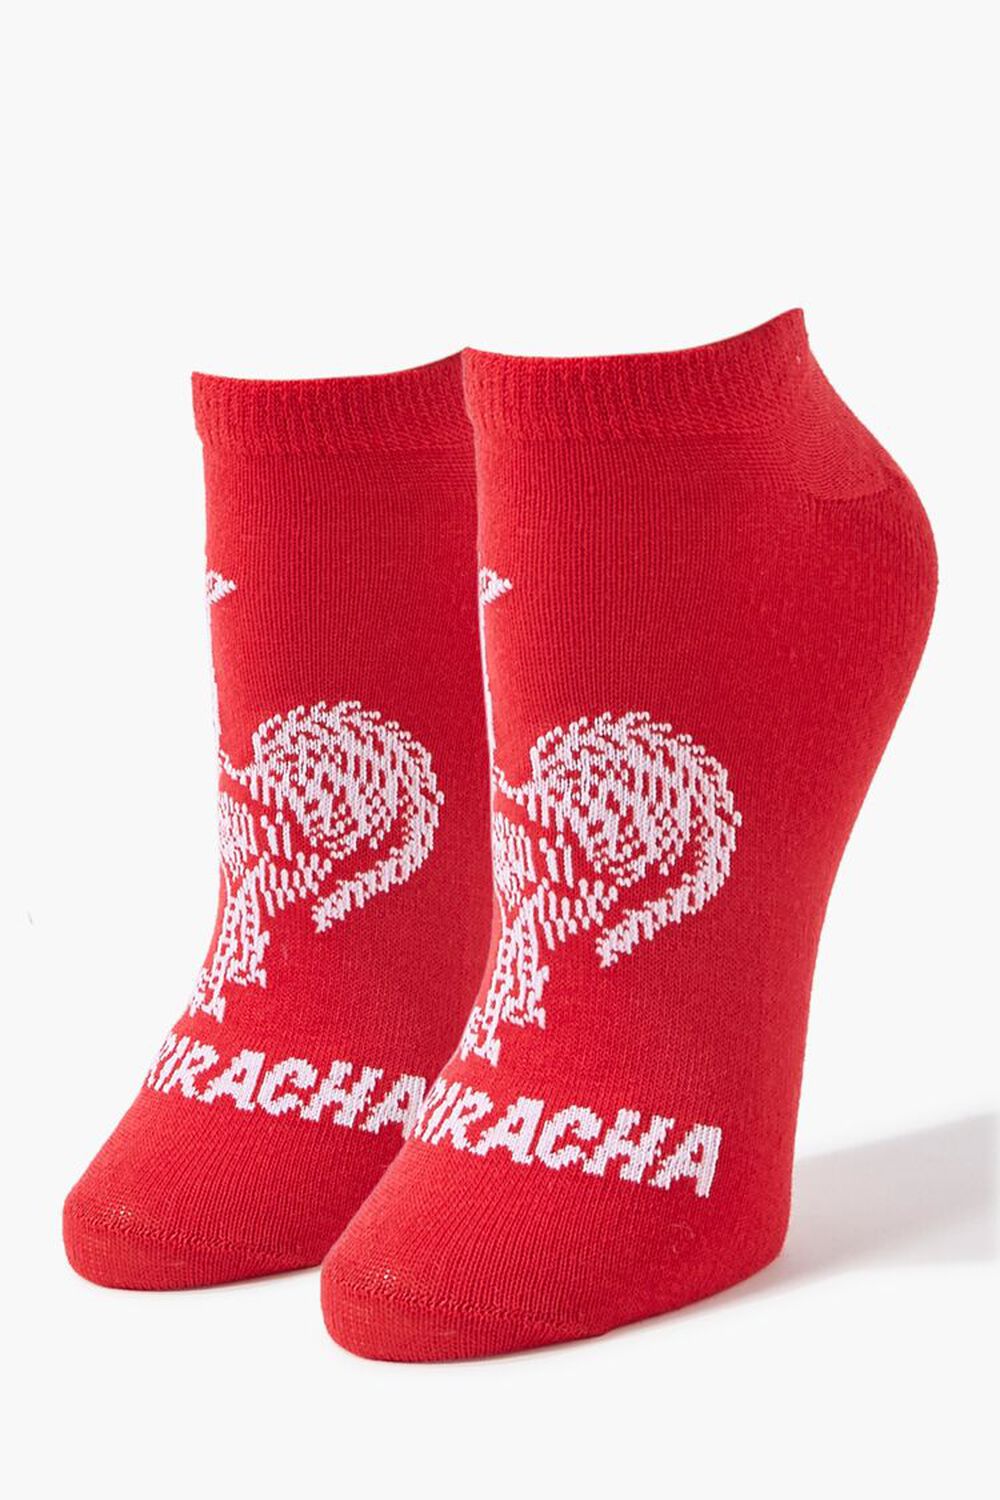 RED/MULTI Sriracha Ankle Socks, image 1